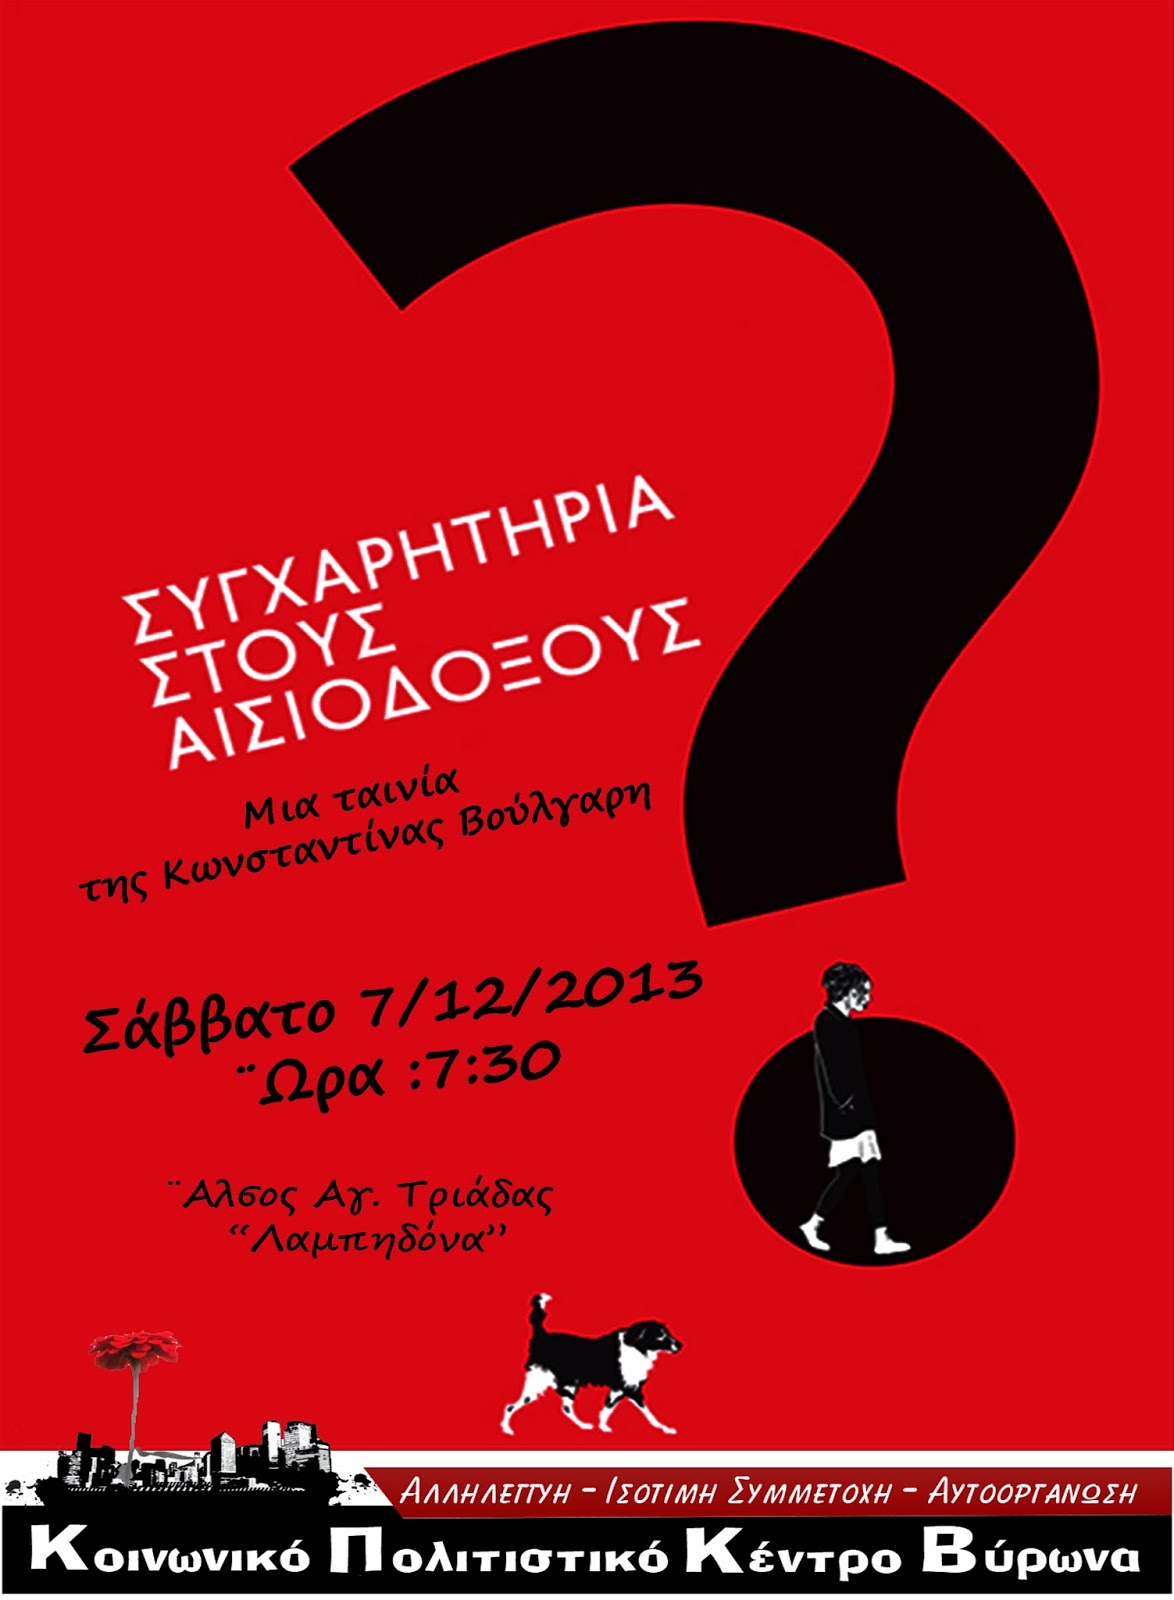 Sygharitiria stous aisiodoxous? (2012) with English Subtitles on DVD on DVD